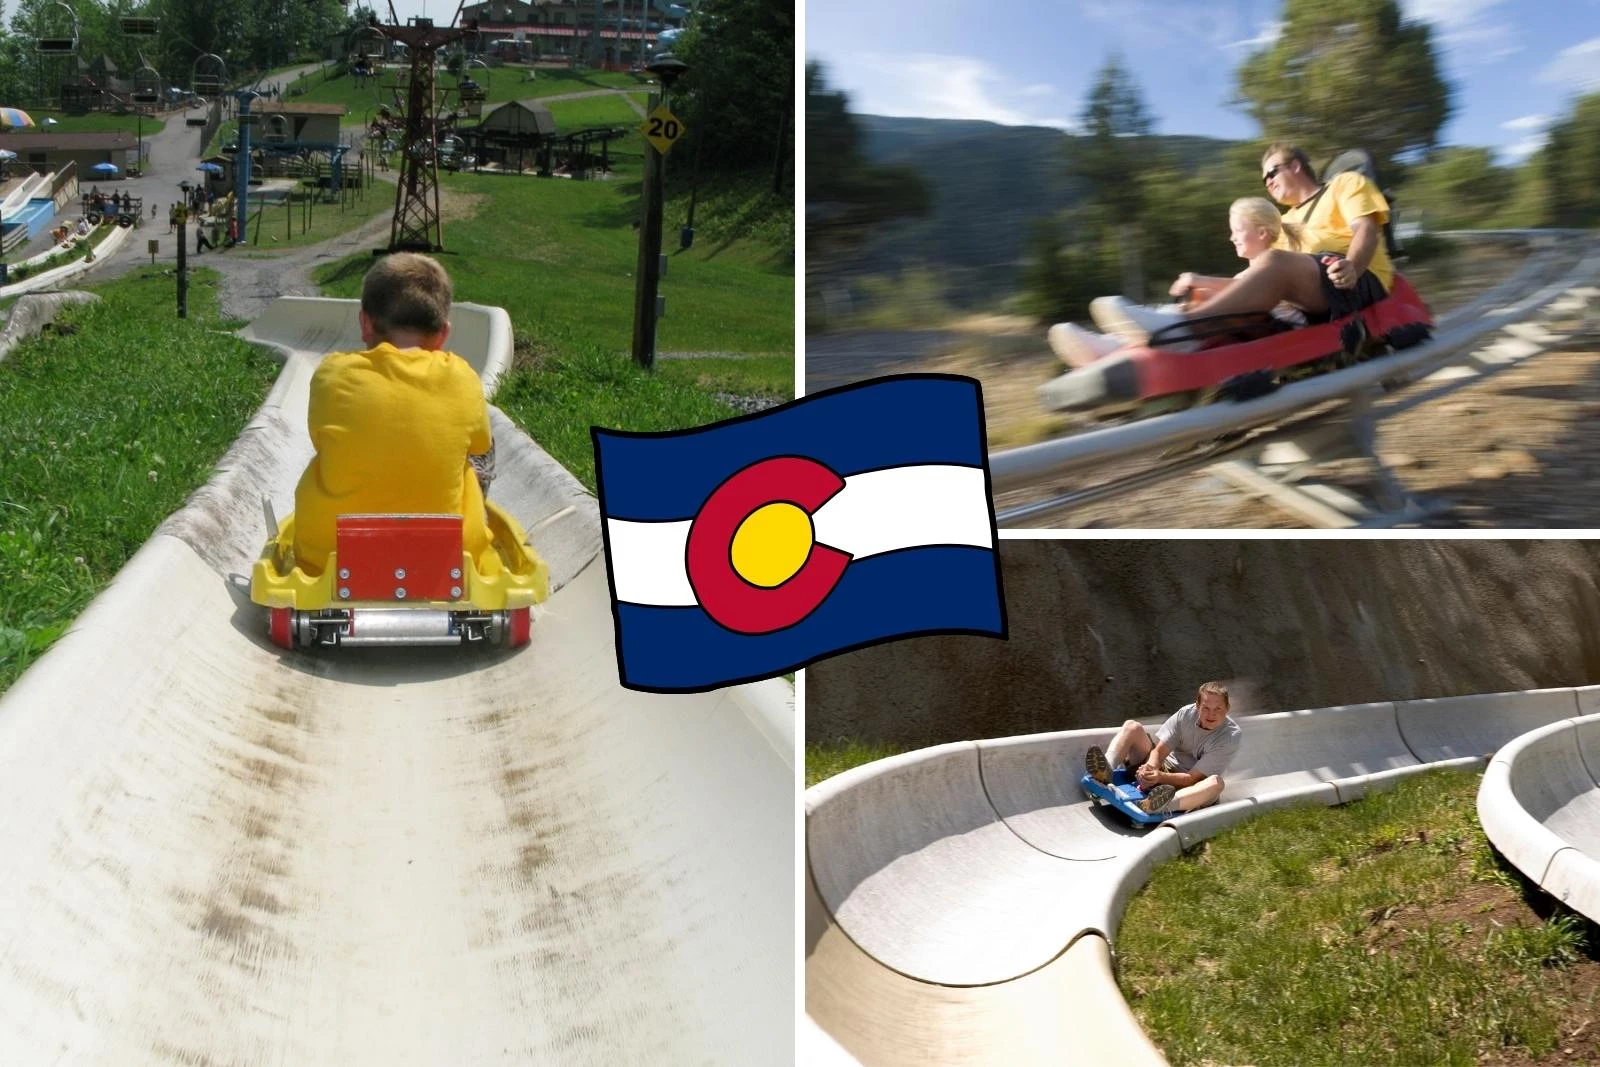 Summer in Colorado: 6 Places to Ride Crazy Fun Alpine Slides